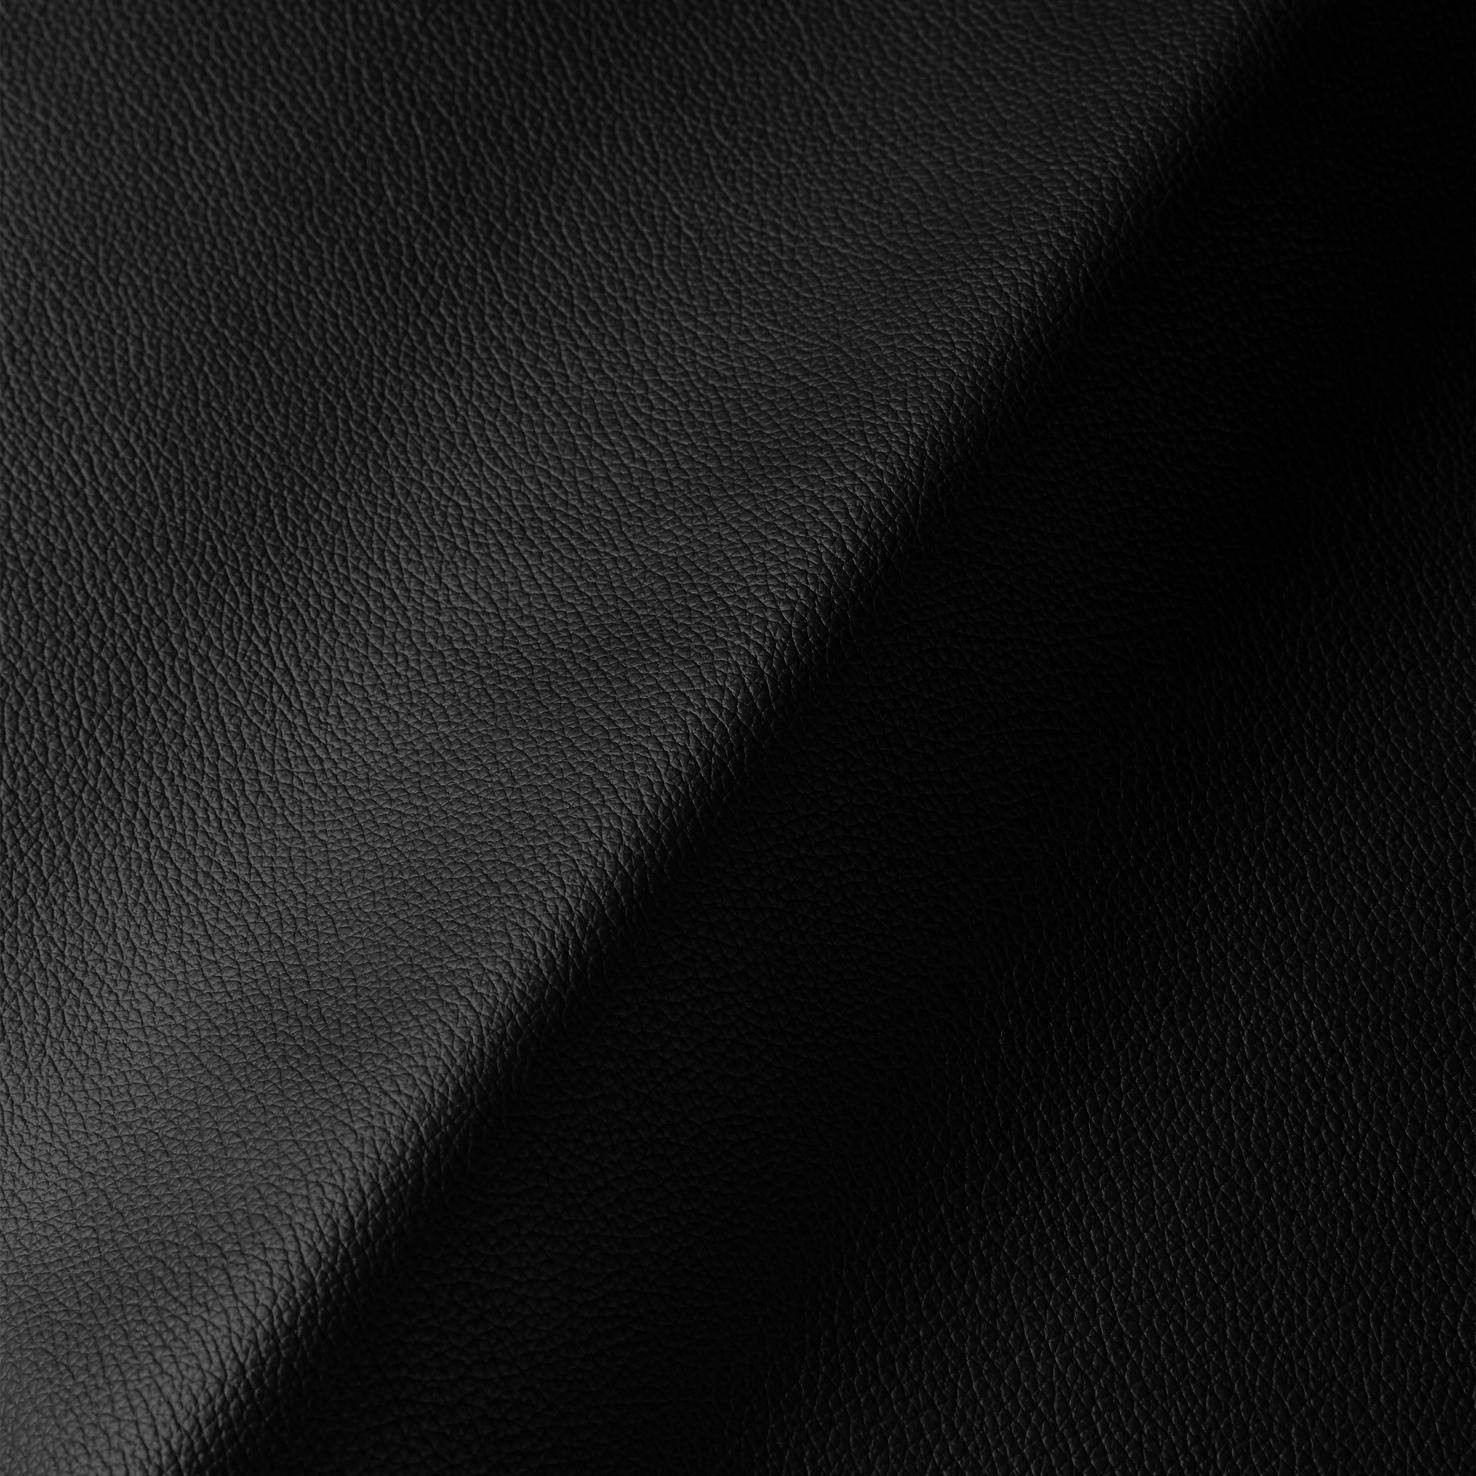 Fabric sample Ultra black